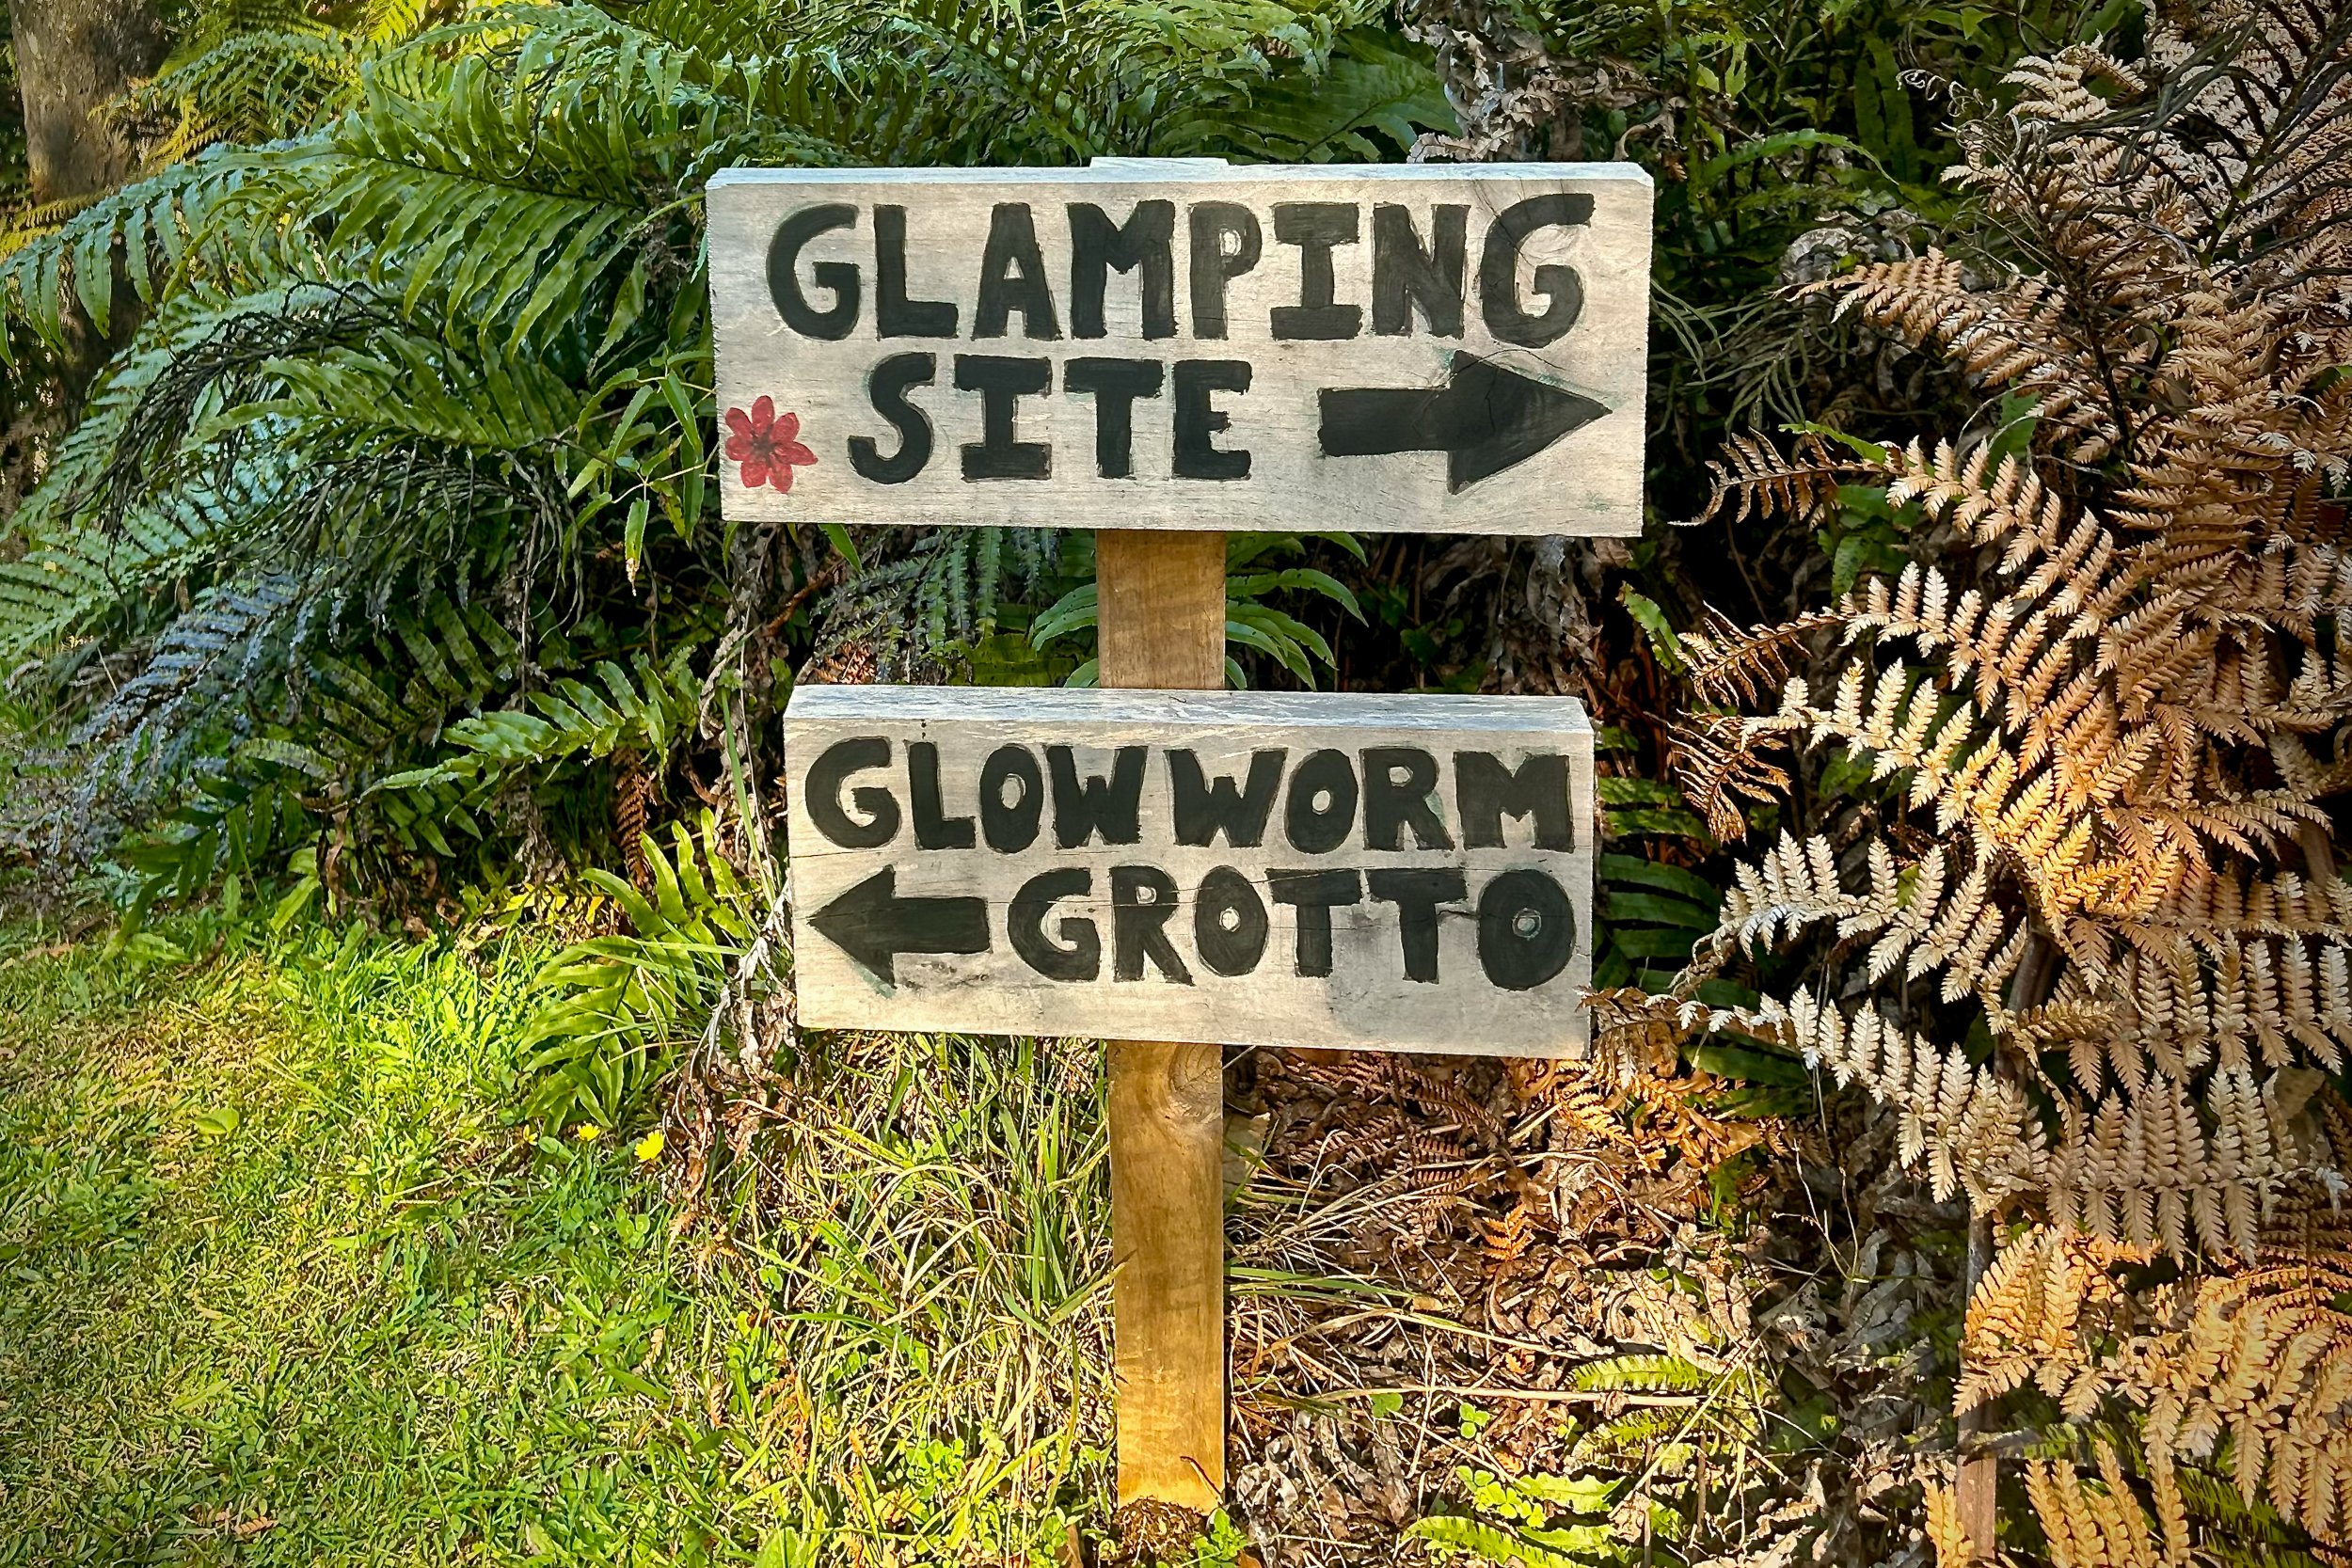 Short 1min walk to the Glowworm grotto this way